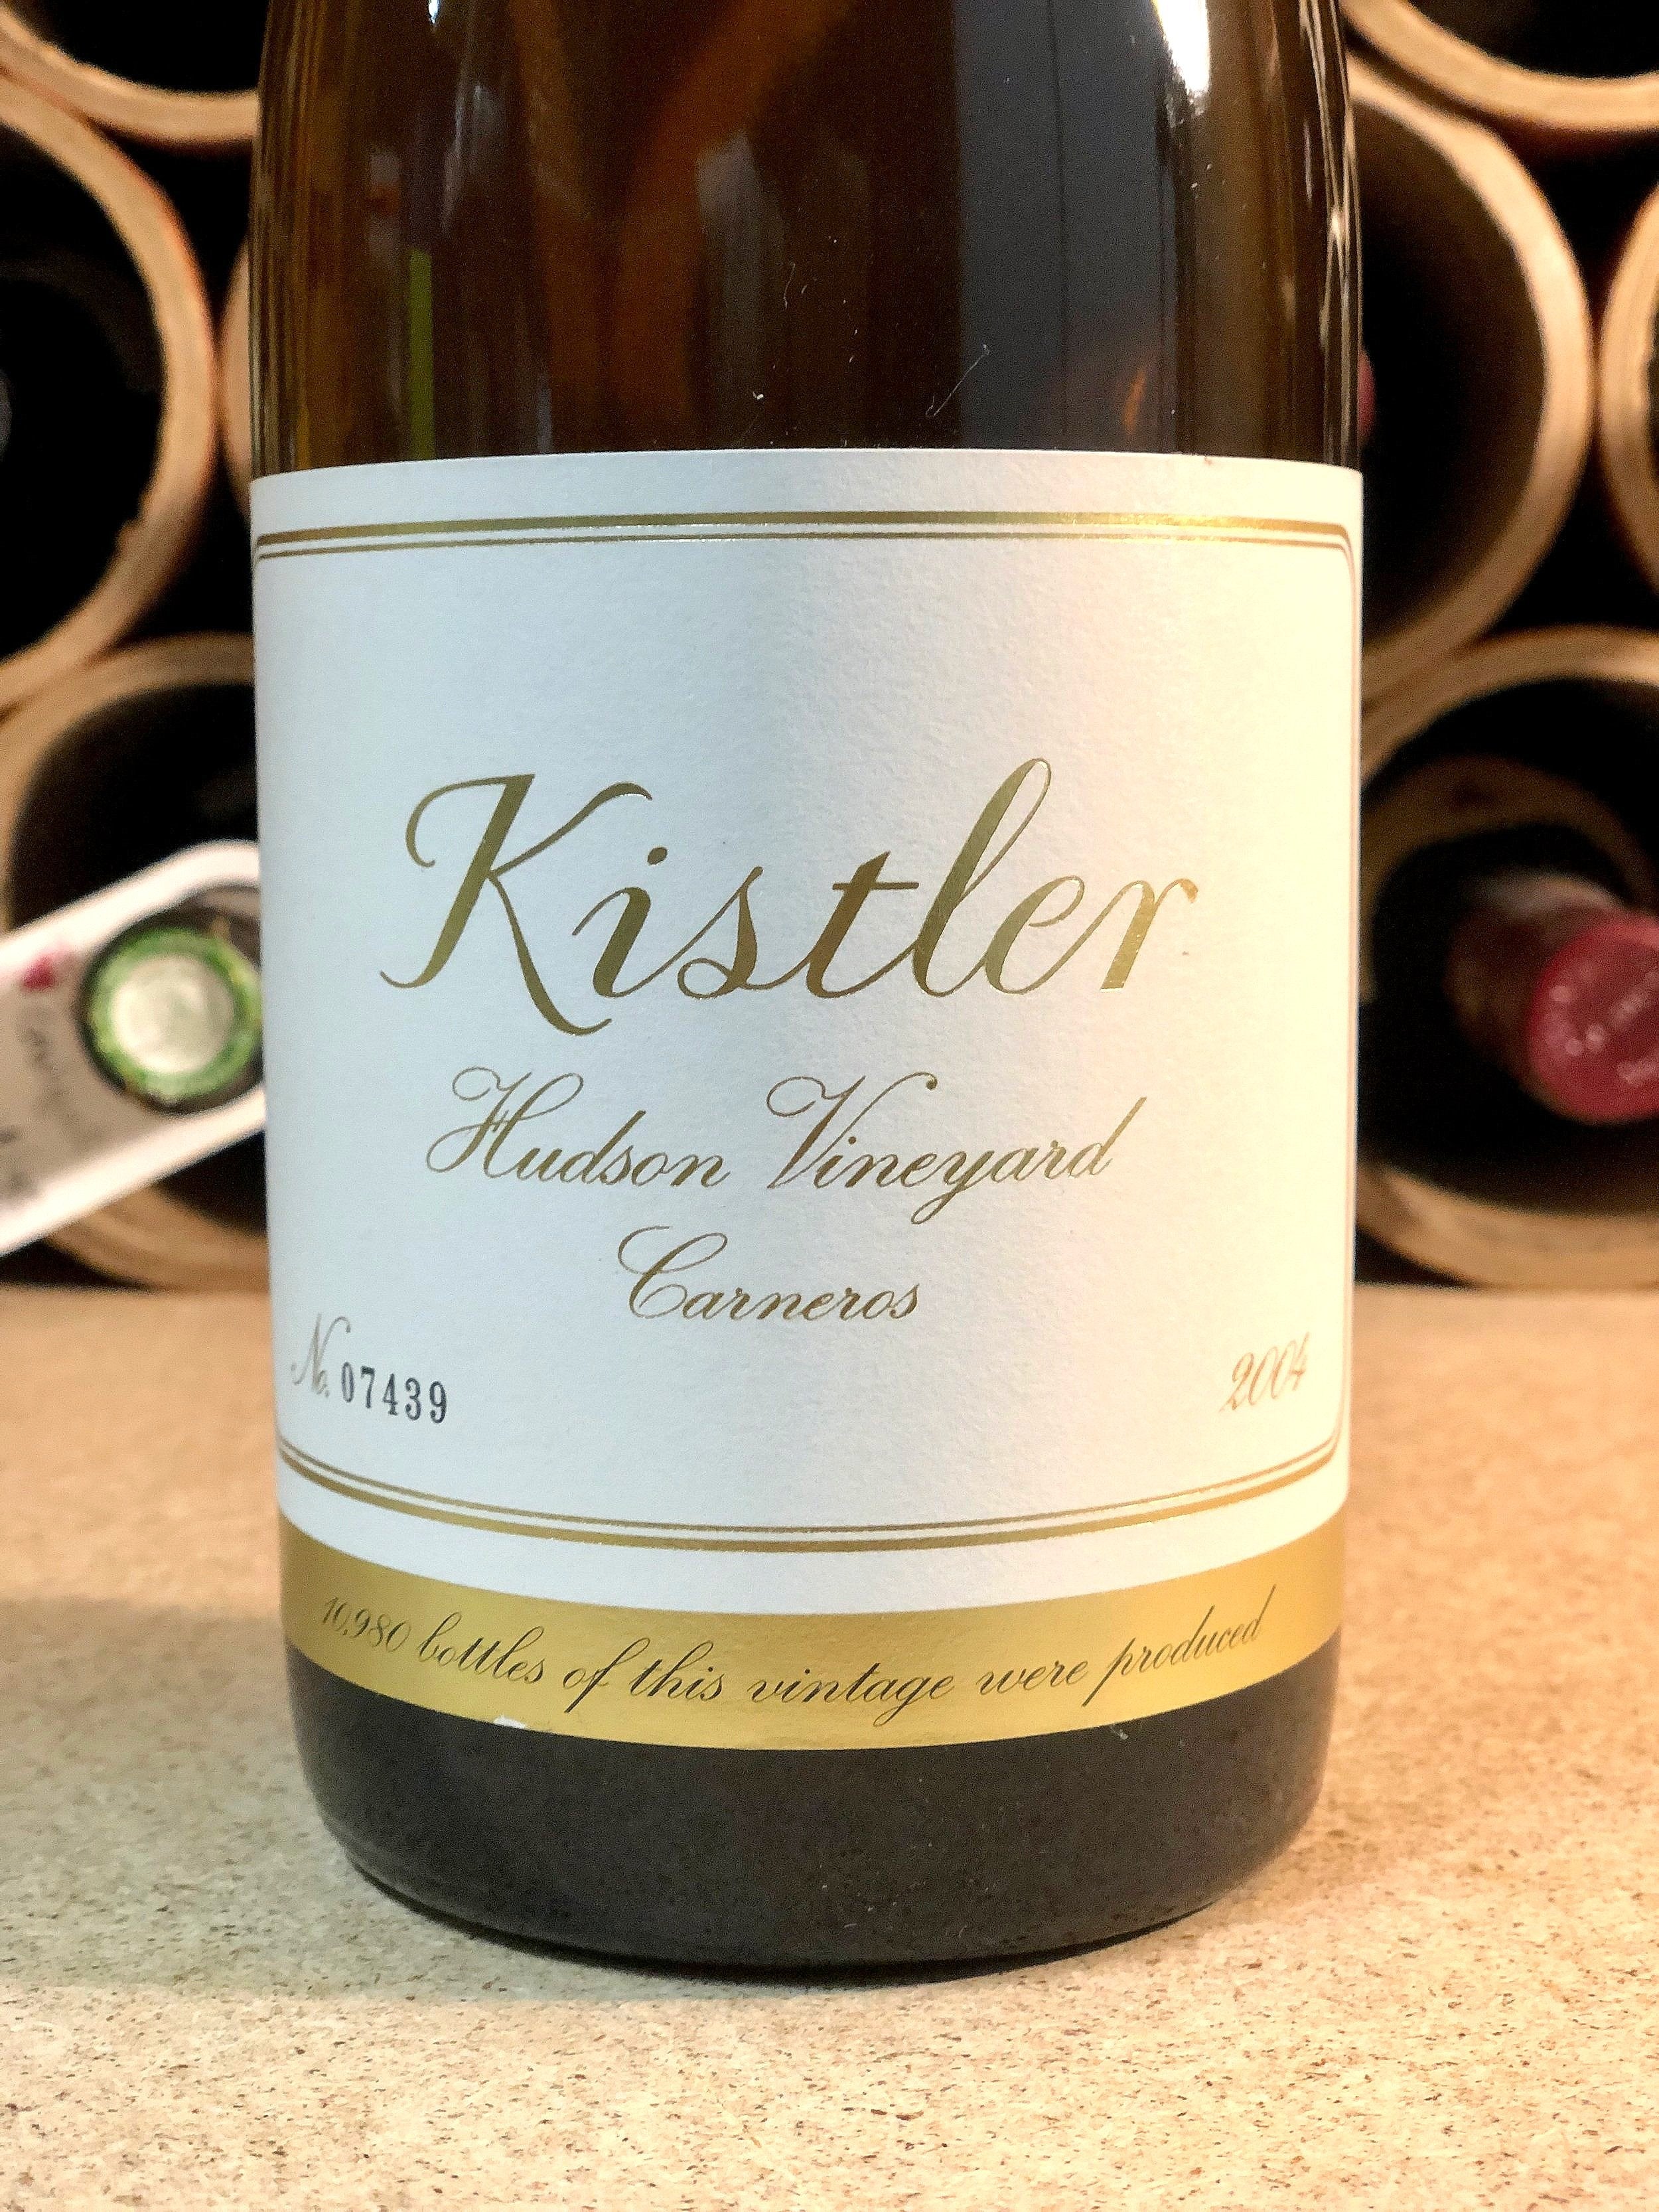 Kistler, Carneros, Hudson Vineyard, Chardonnay 2004